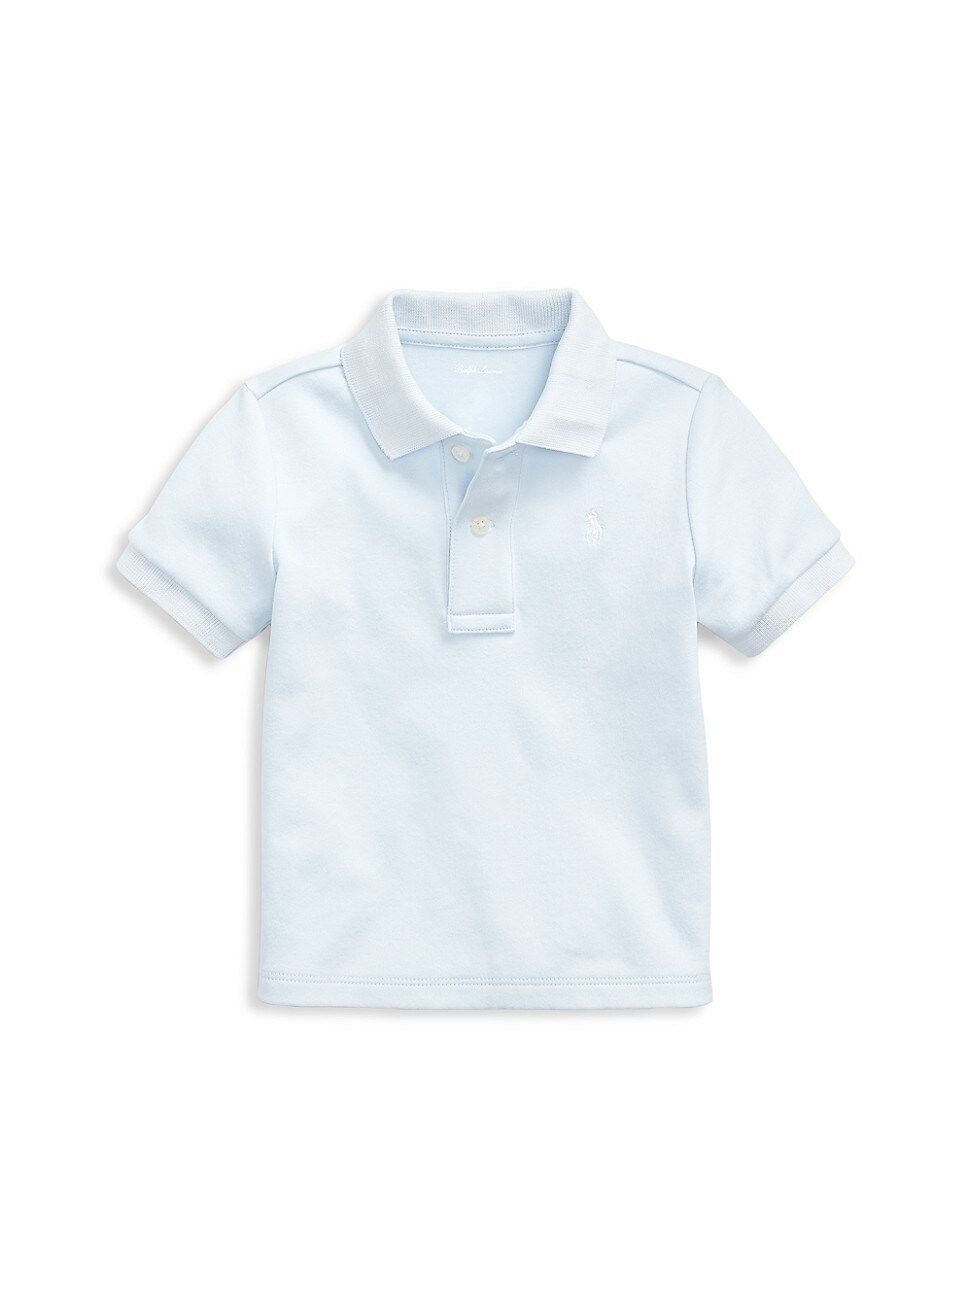 Ralph Lauren Baby Boy's Polo Shirt - Blue - Size 9 Months | Saks Fifth Avenue